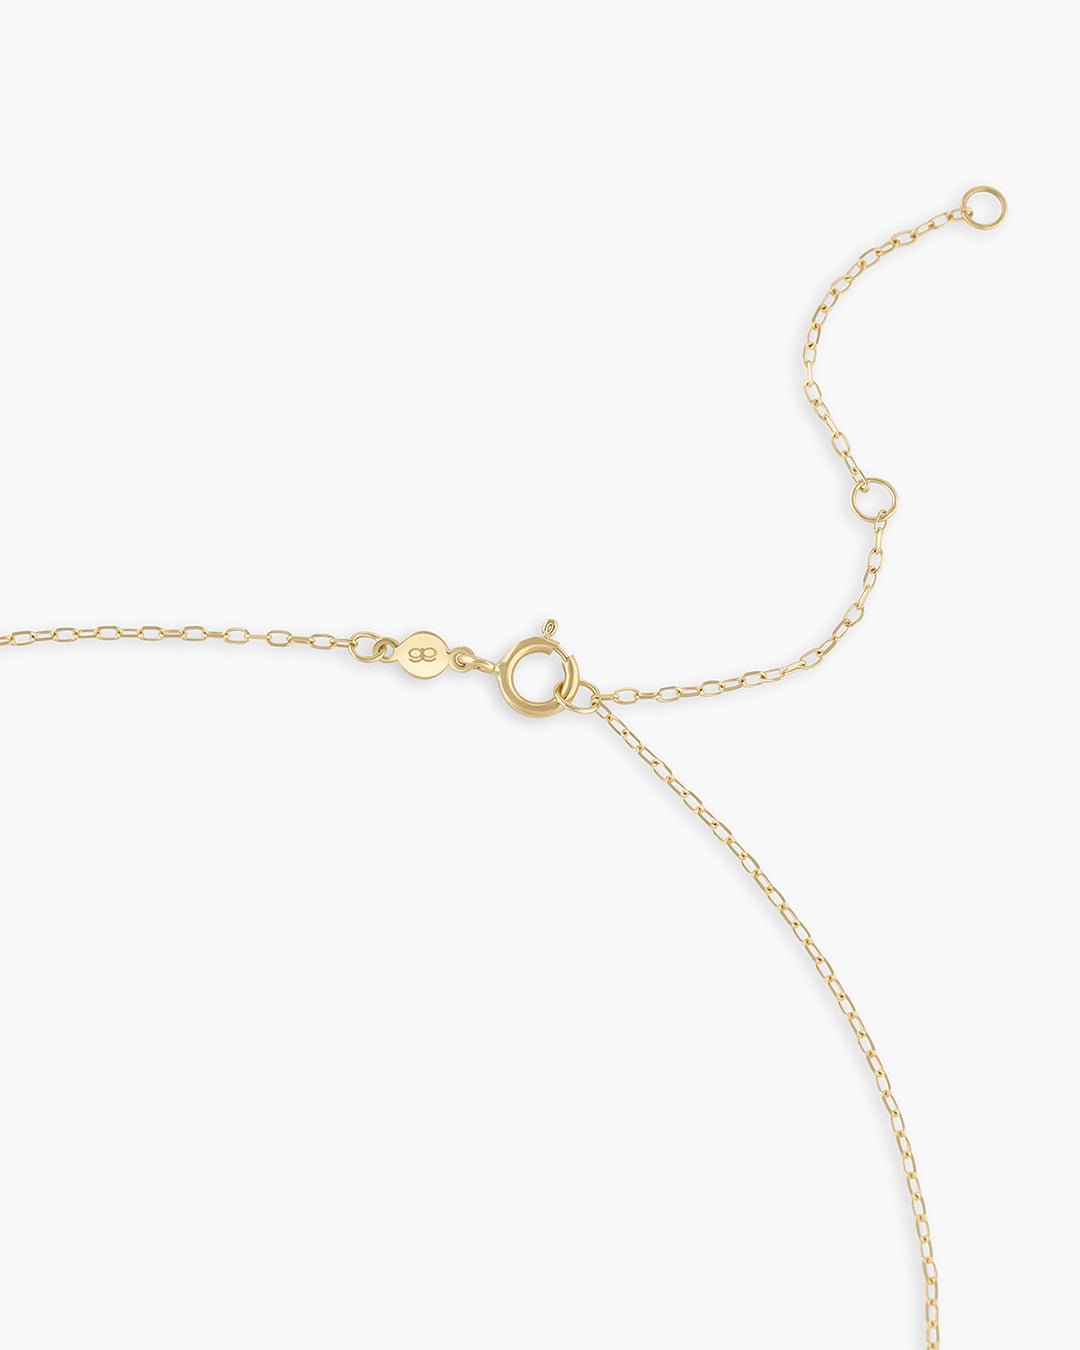 Diamond Kara Padlock Charm Necklace in 14K Solid Gold, Women's by Gorjana